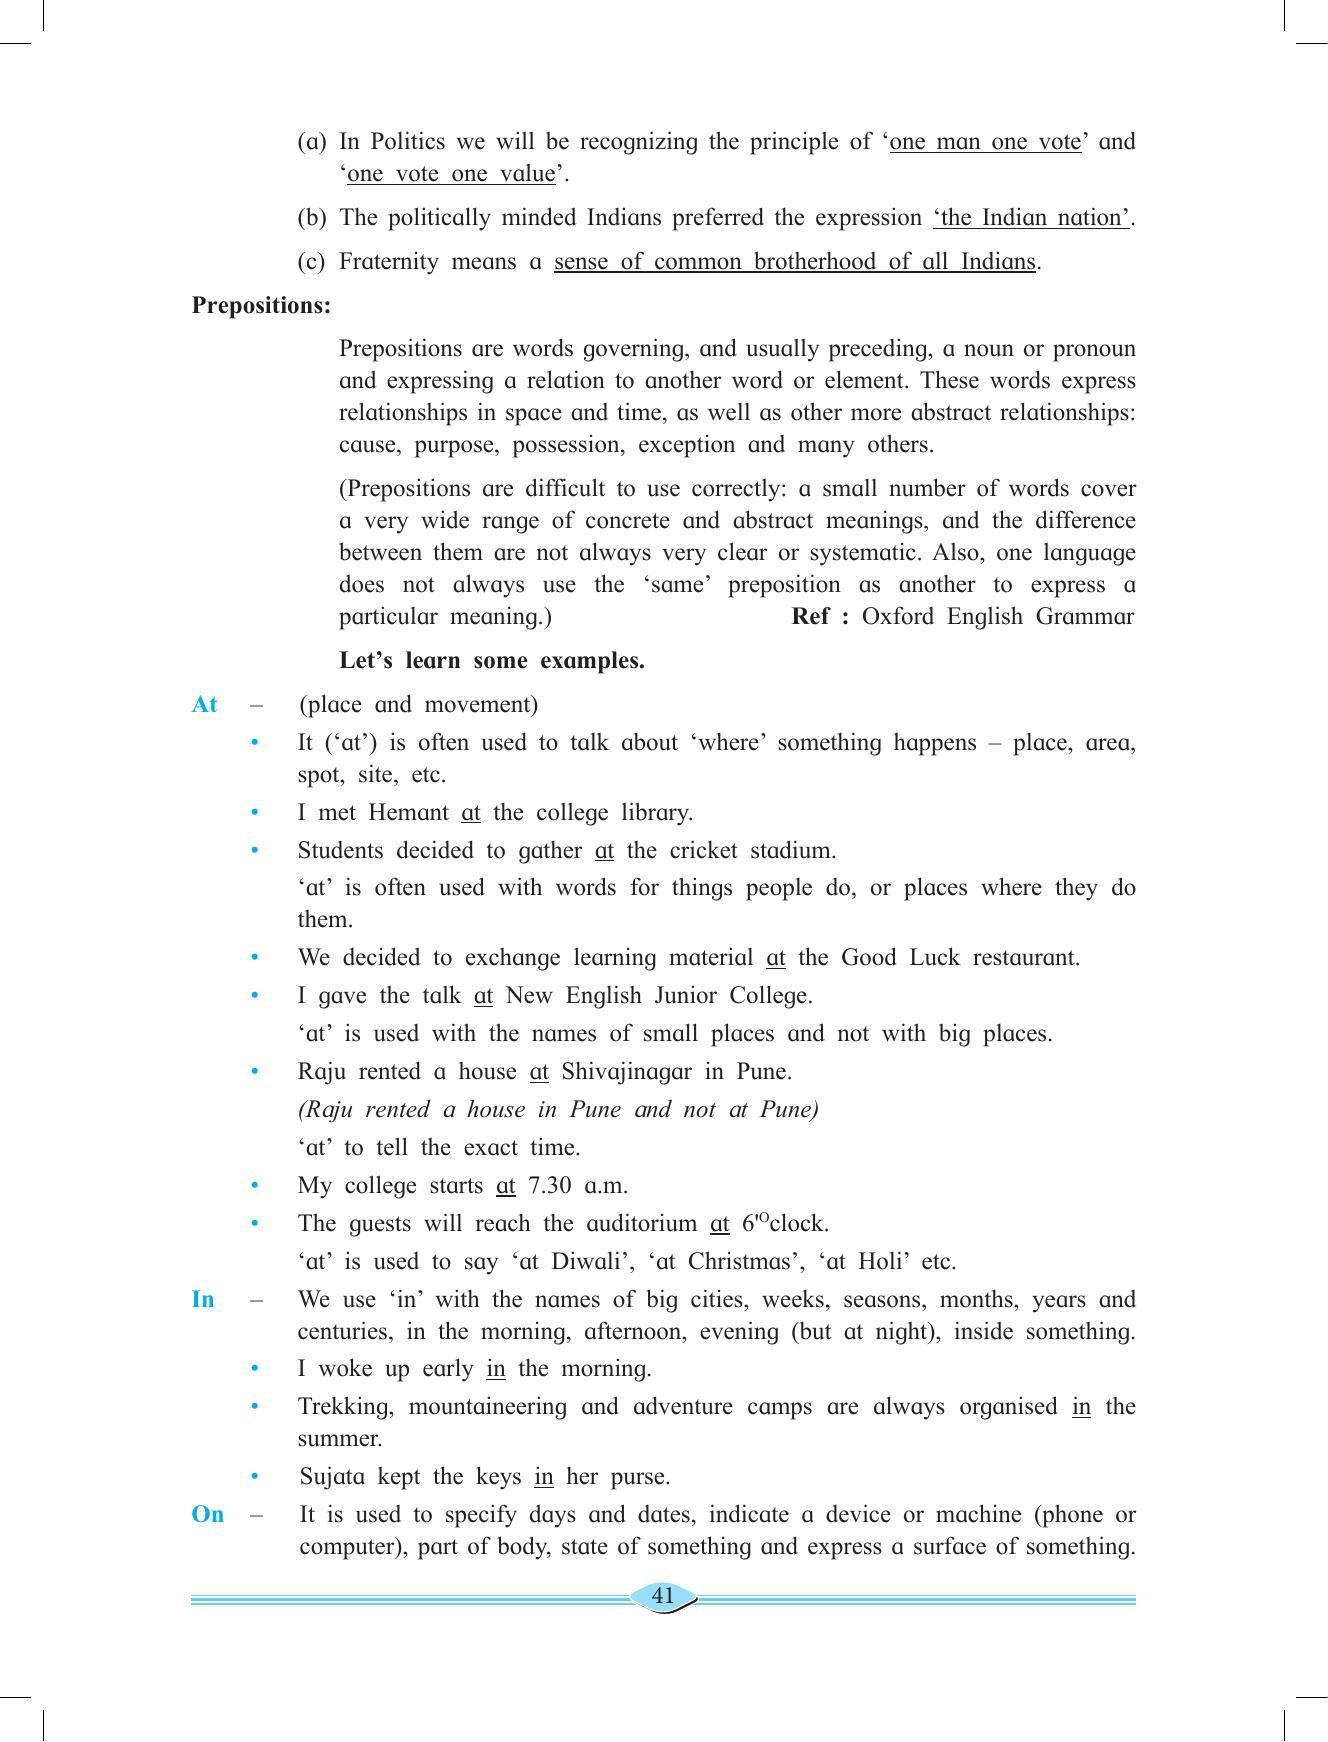 Maharashtra Board Class 11 English Textbook - Page 55